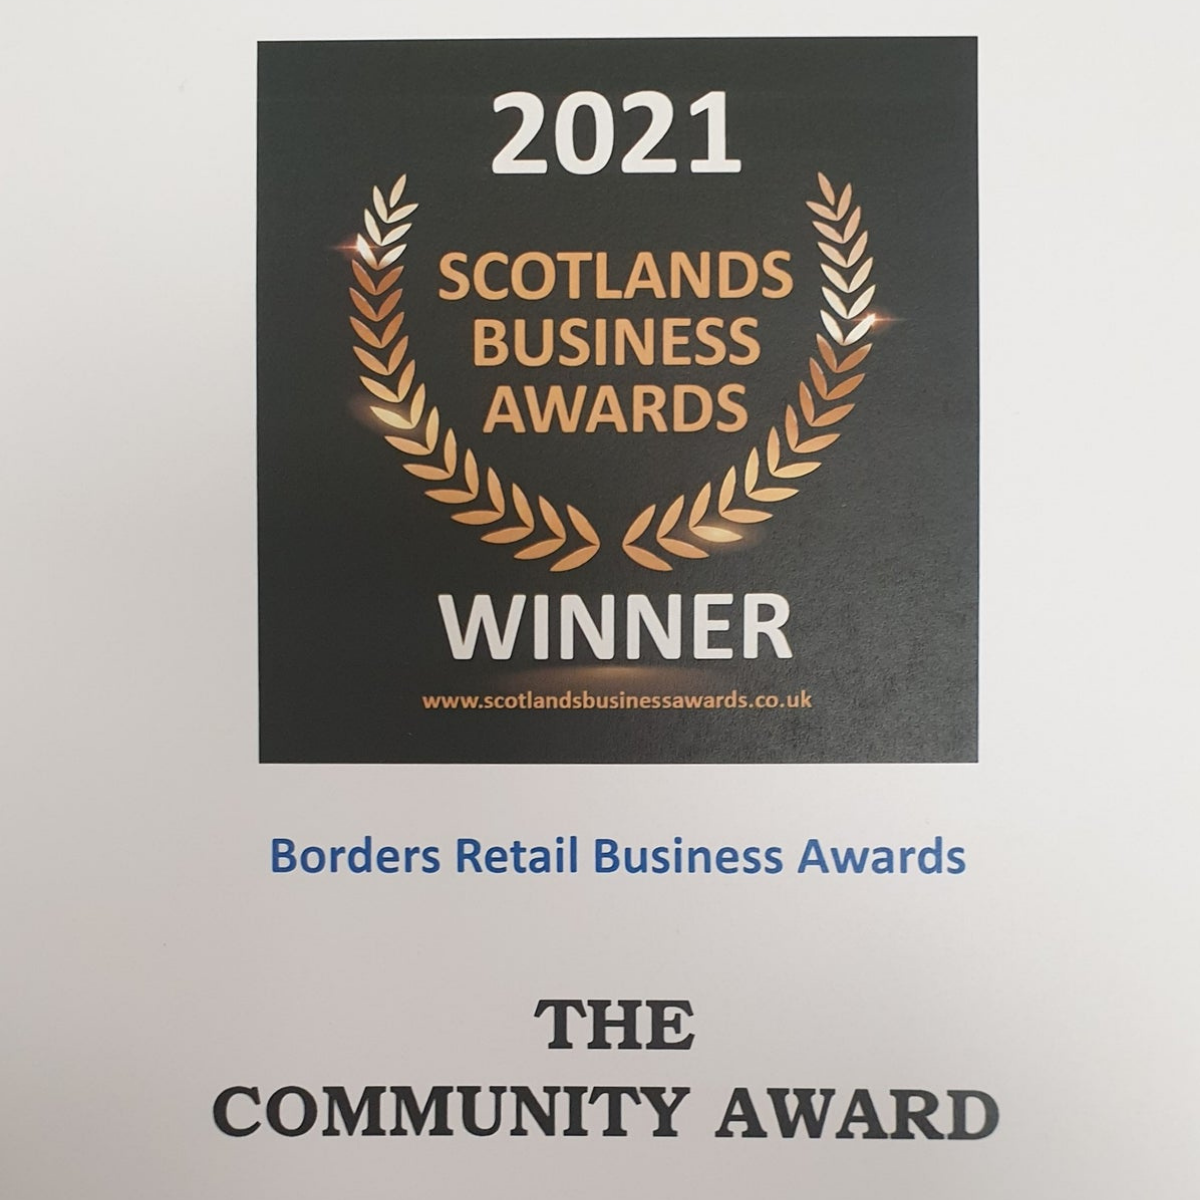 WE WON! Scotlands Business Awards 2021